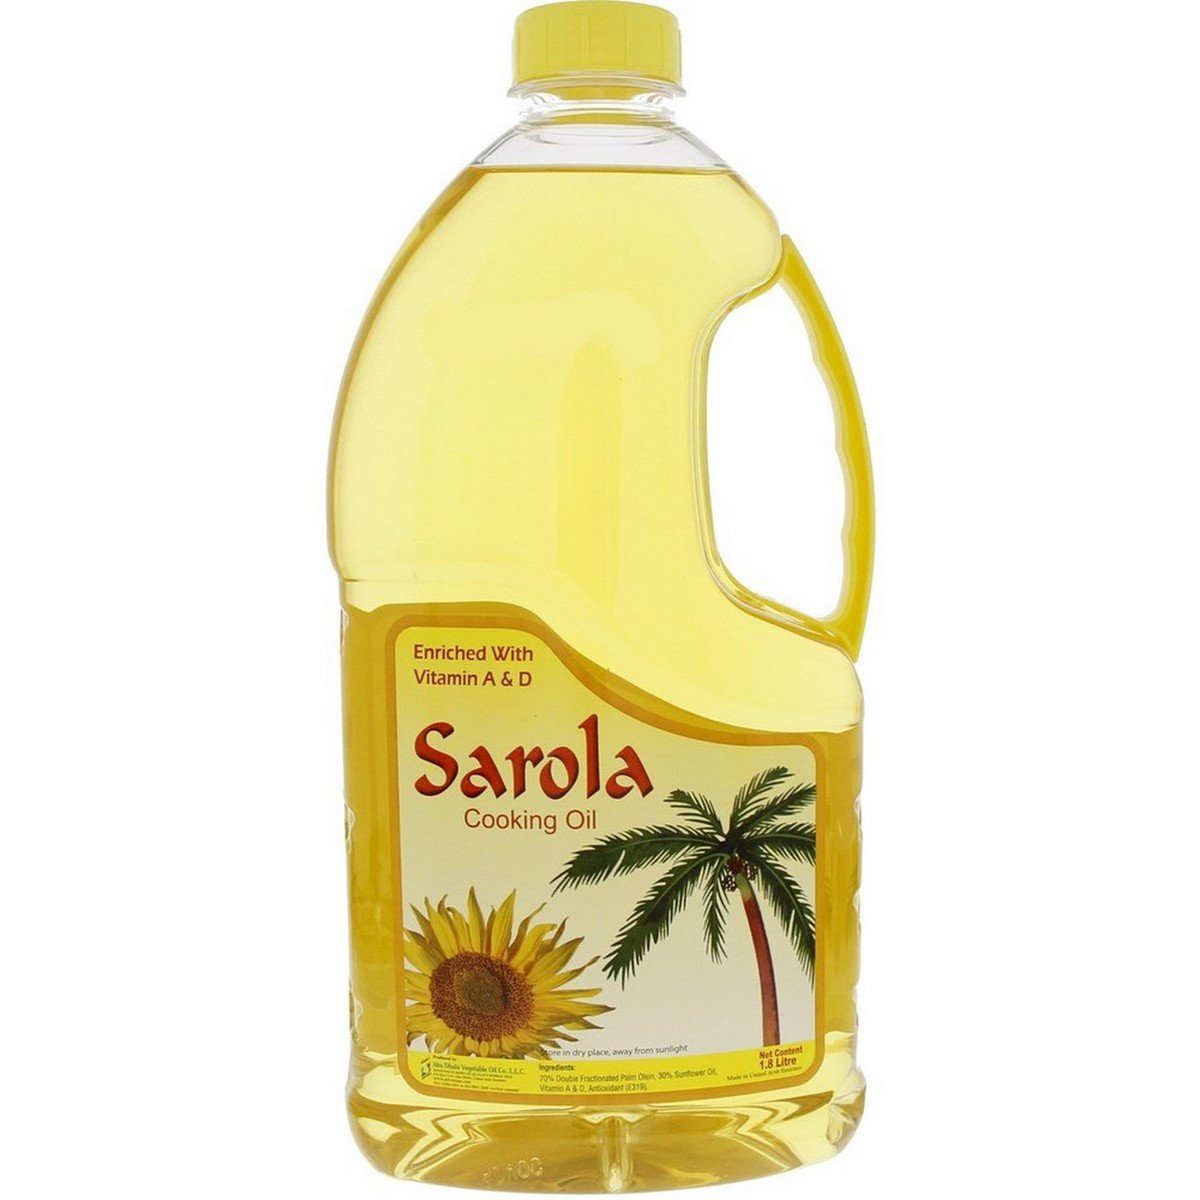 Sarola Cooking Oil 1.8 Litres